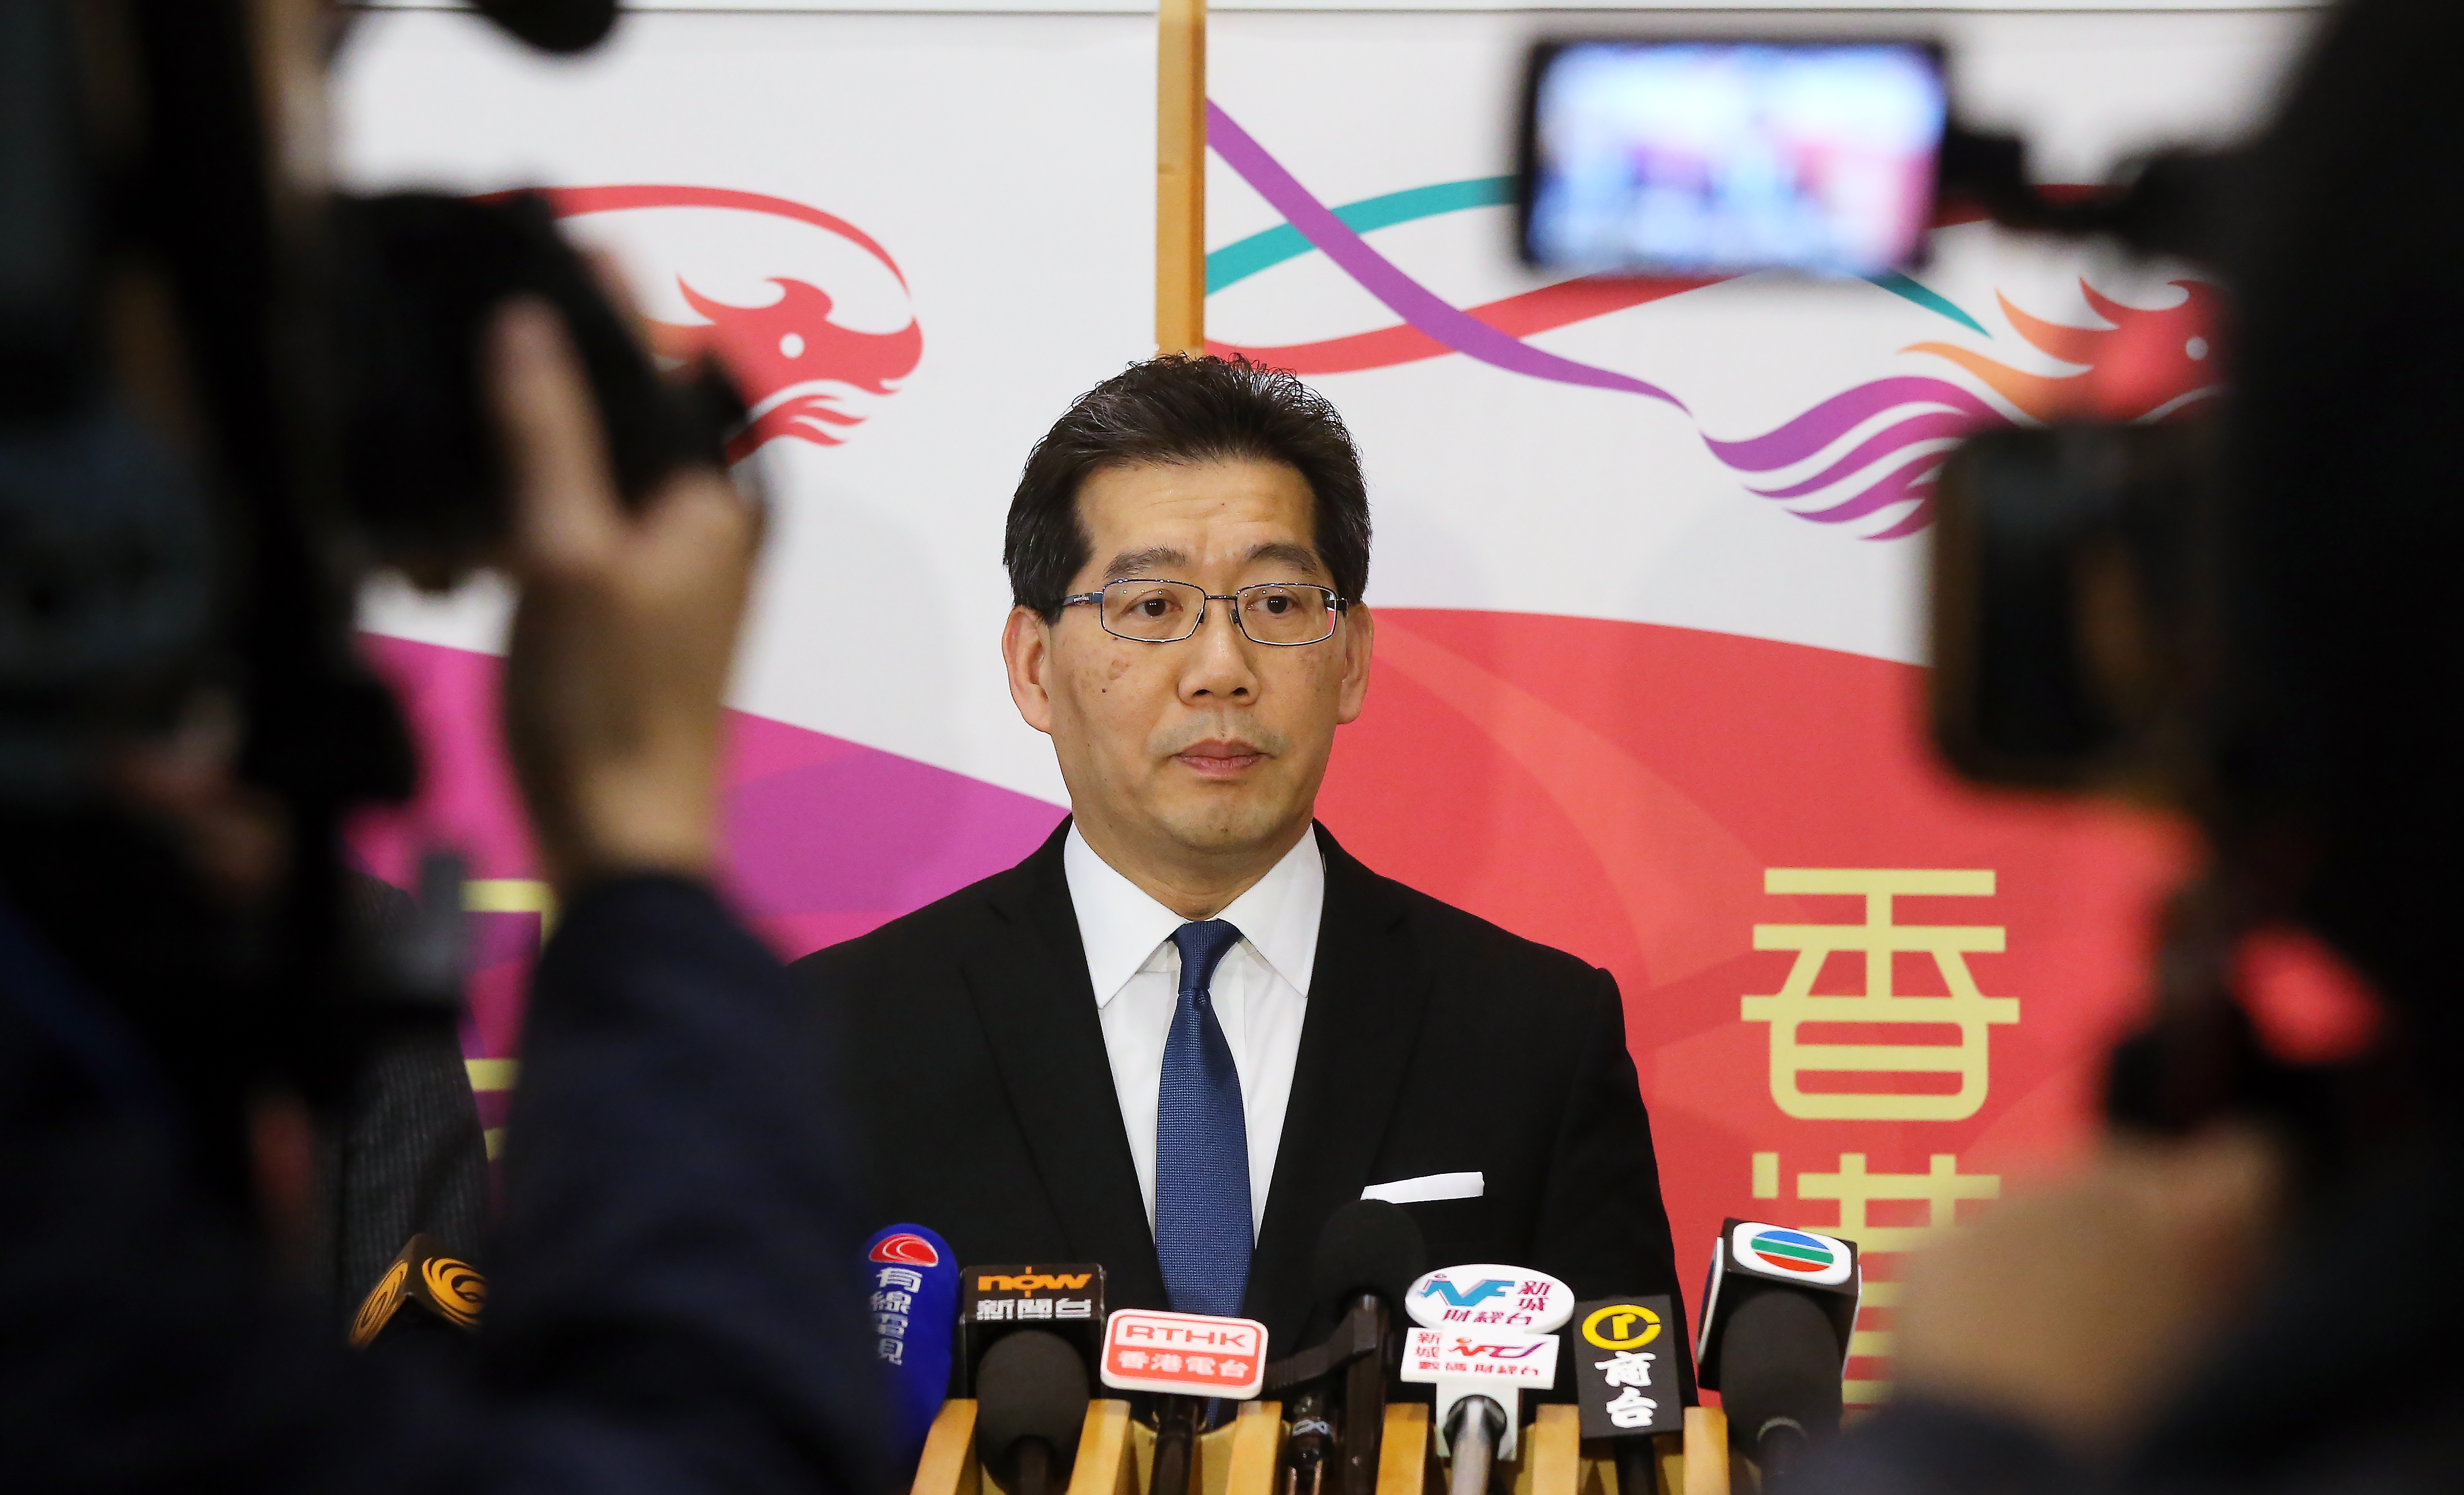 Commerce minister Greg So says Hong Kong needs more “positive energy”. Photo: Dickson Lee